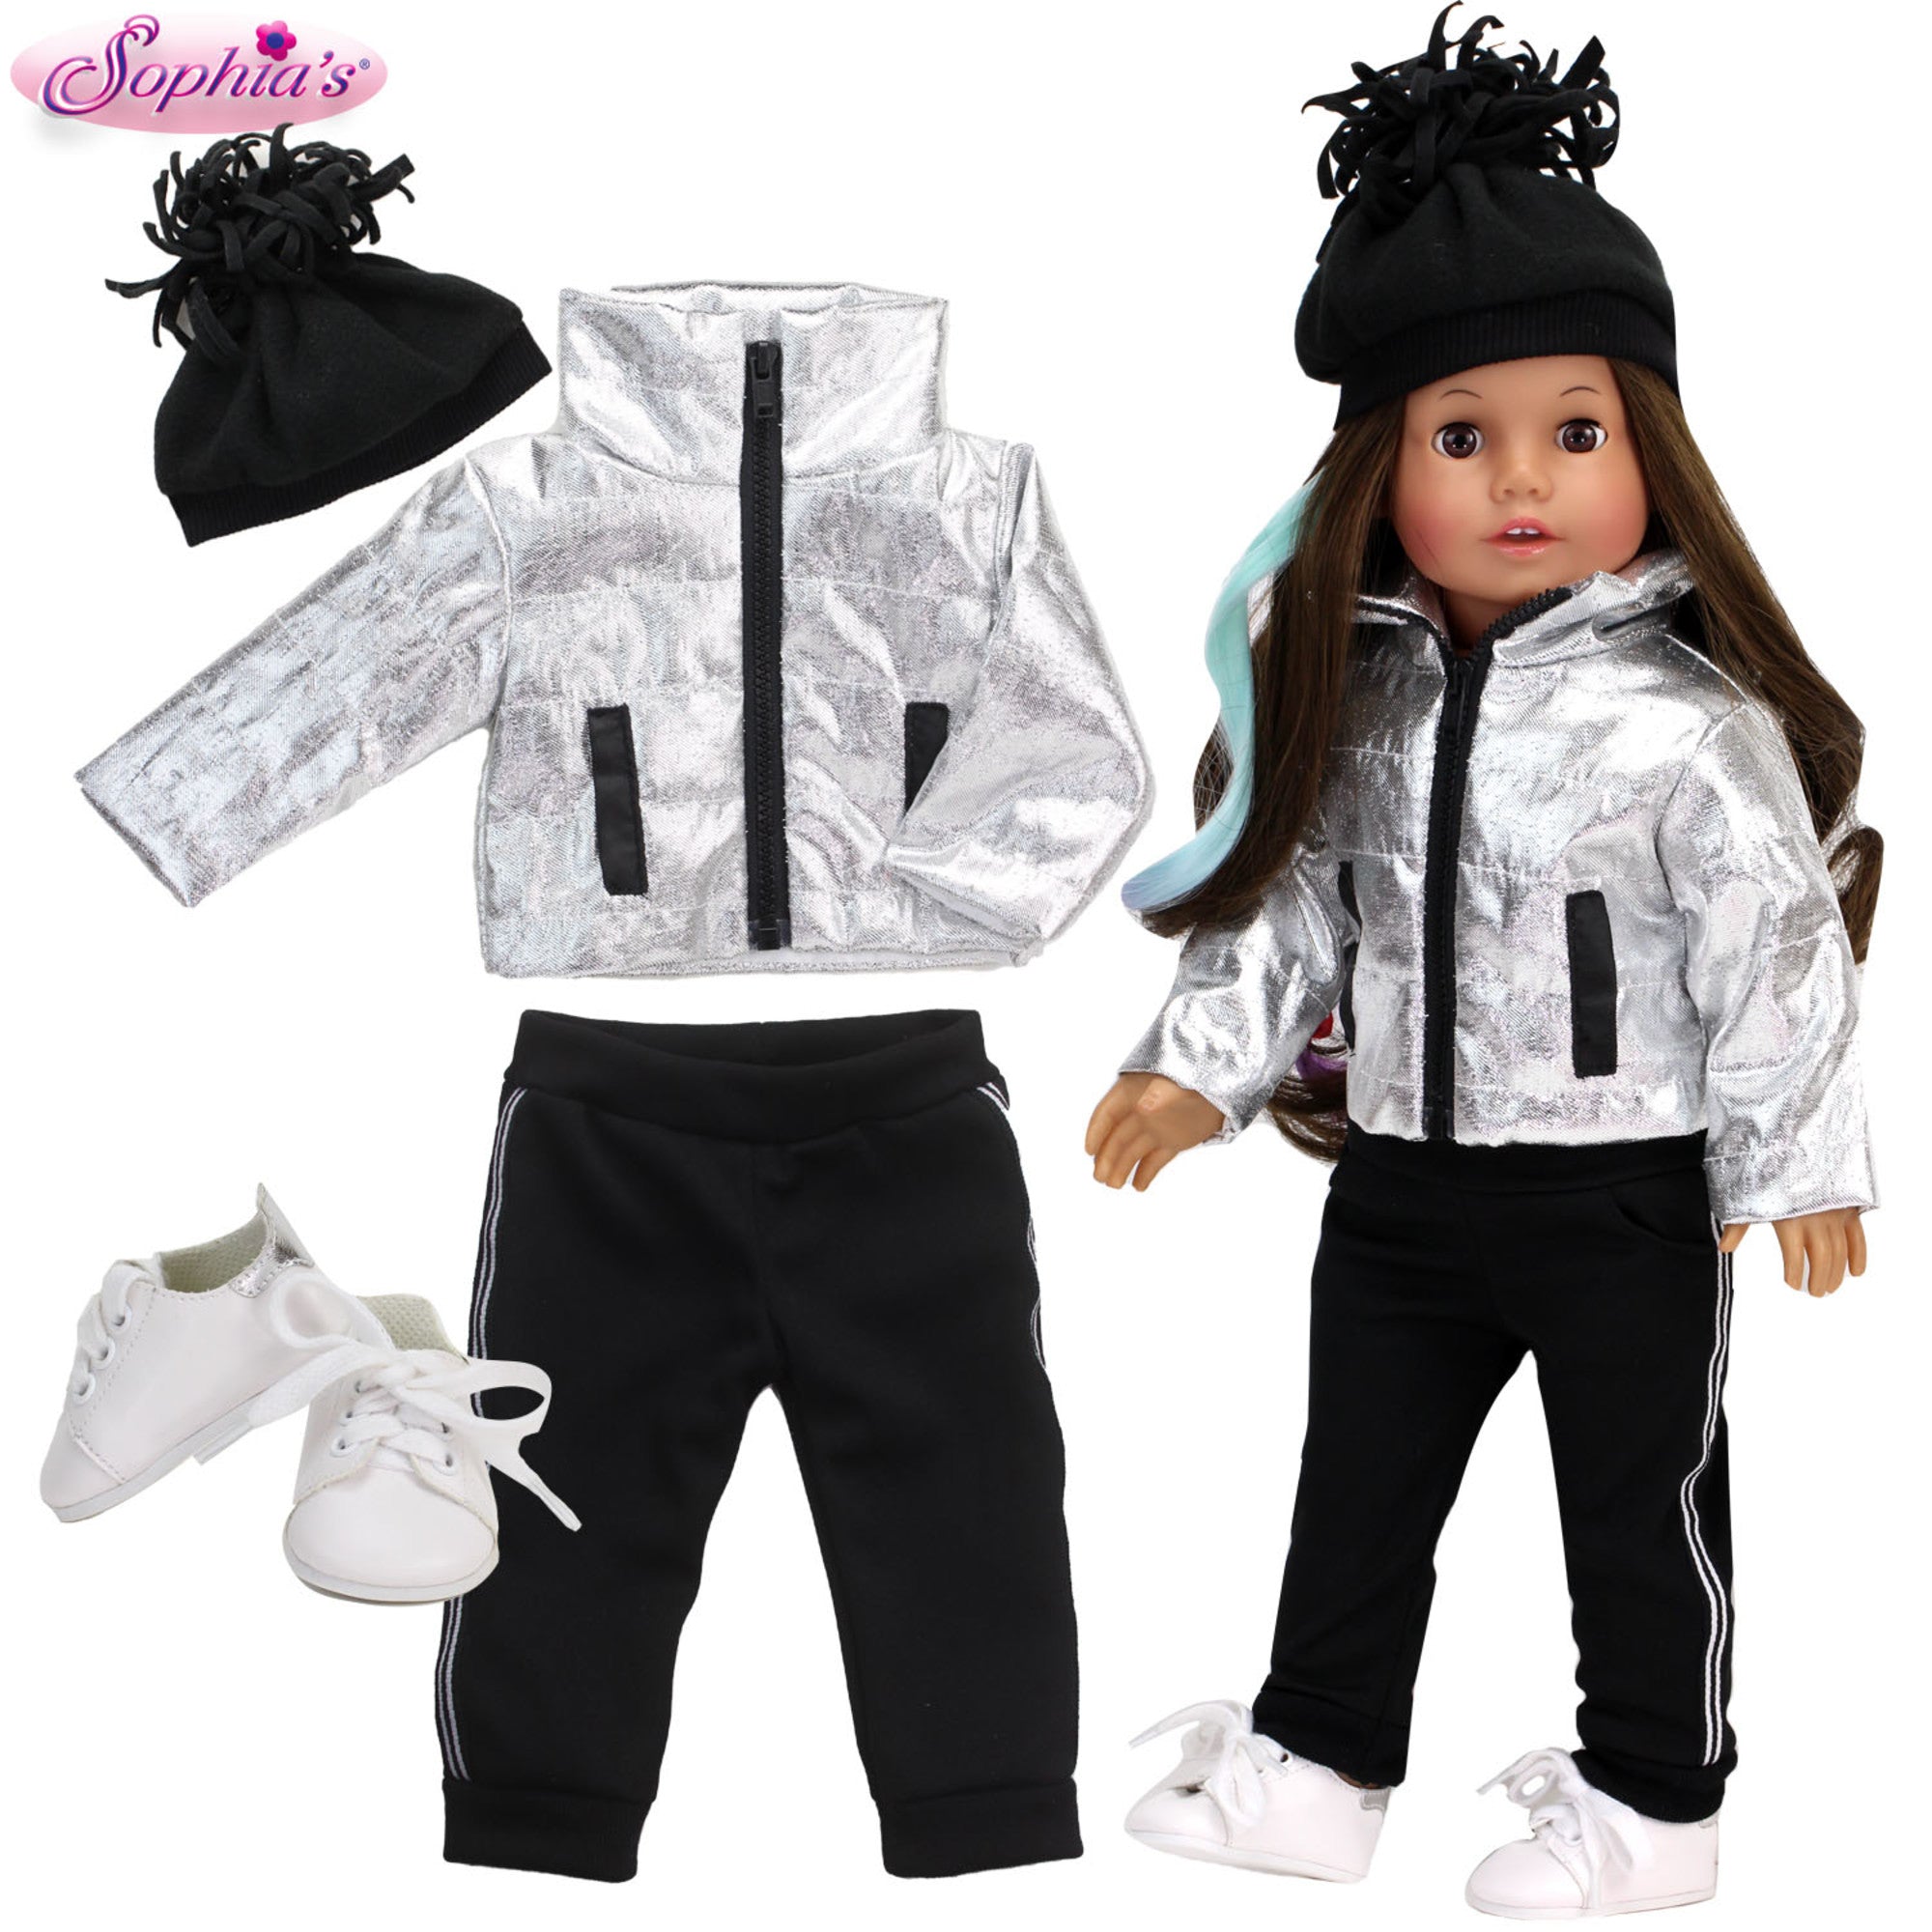 Sophia’s Complete Four-Piece Metallic Zip-Up Jacket, Black Side Stripe Joggers, Sneakers, & Pom Pom Hat for 18” Dolls, Silver/Black